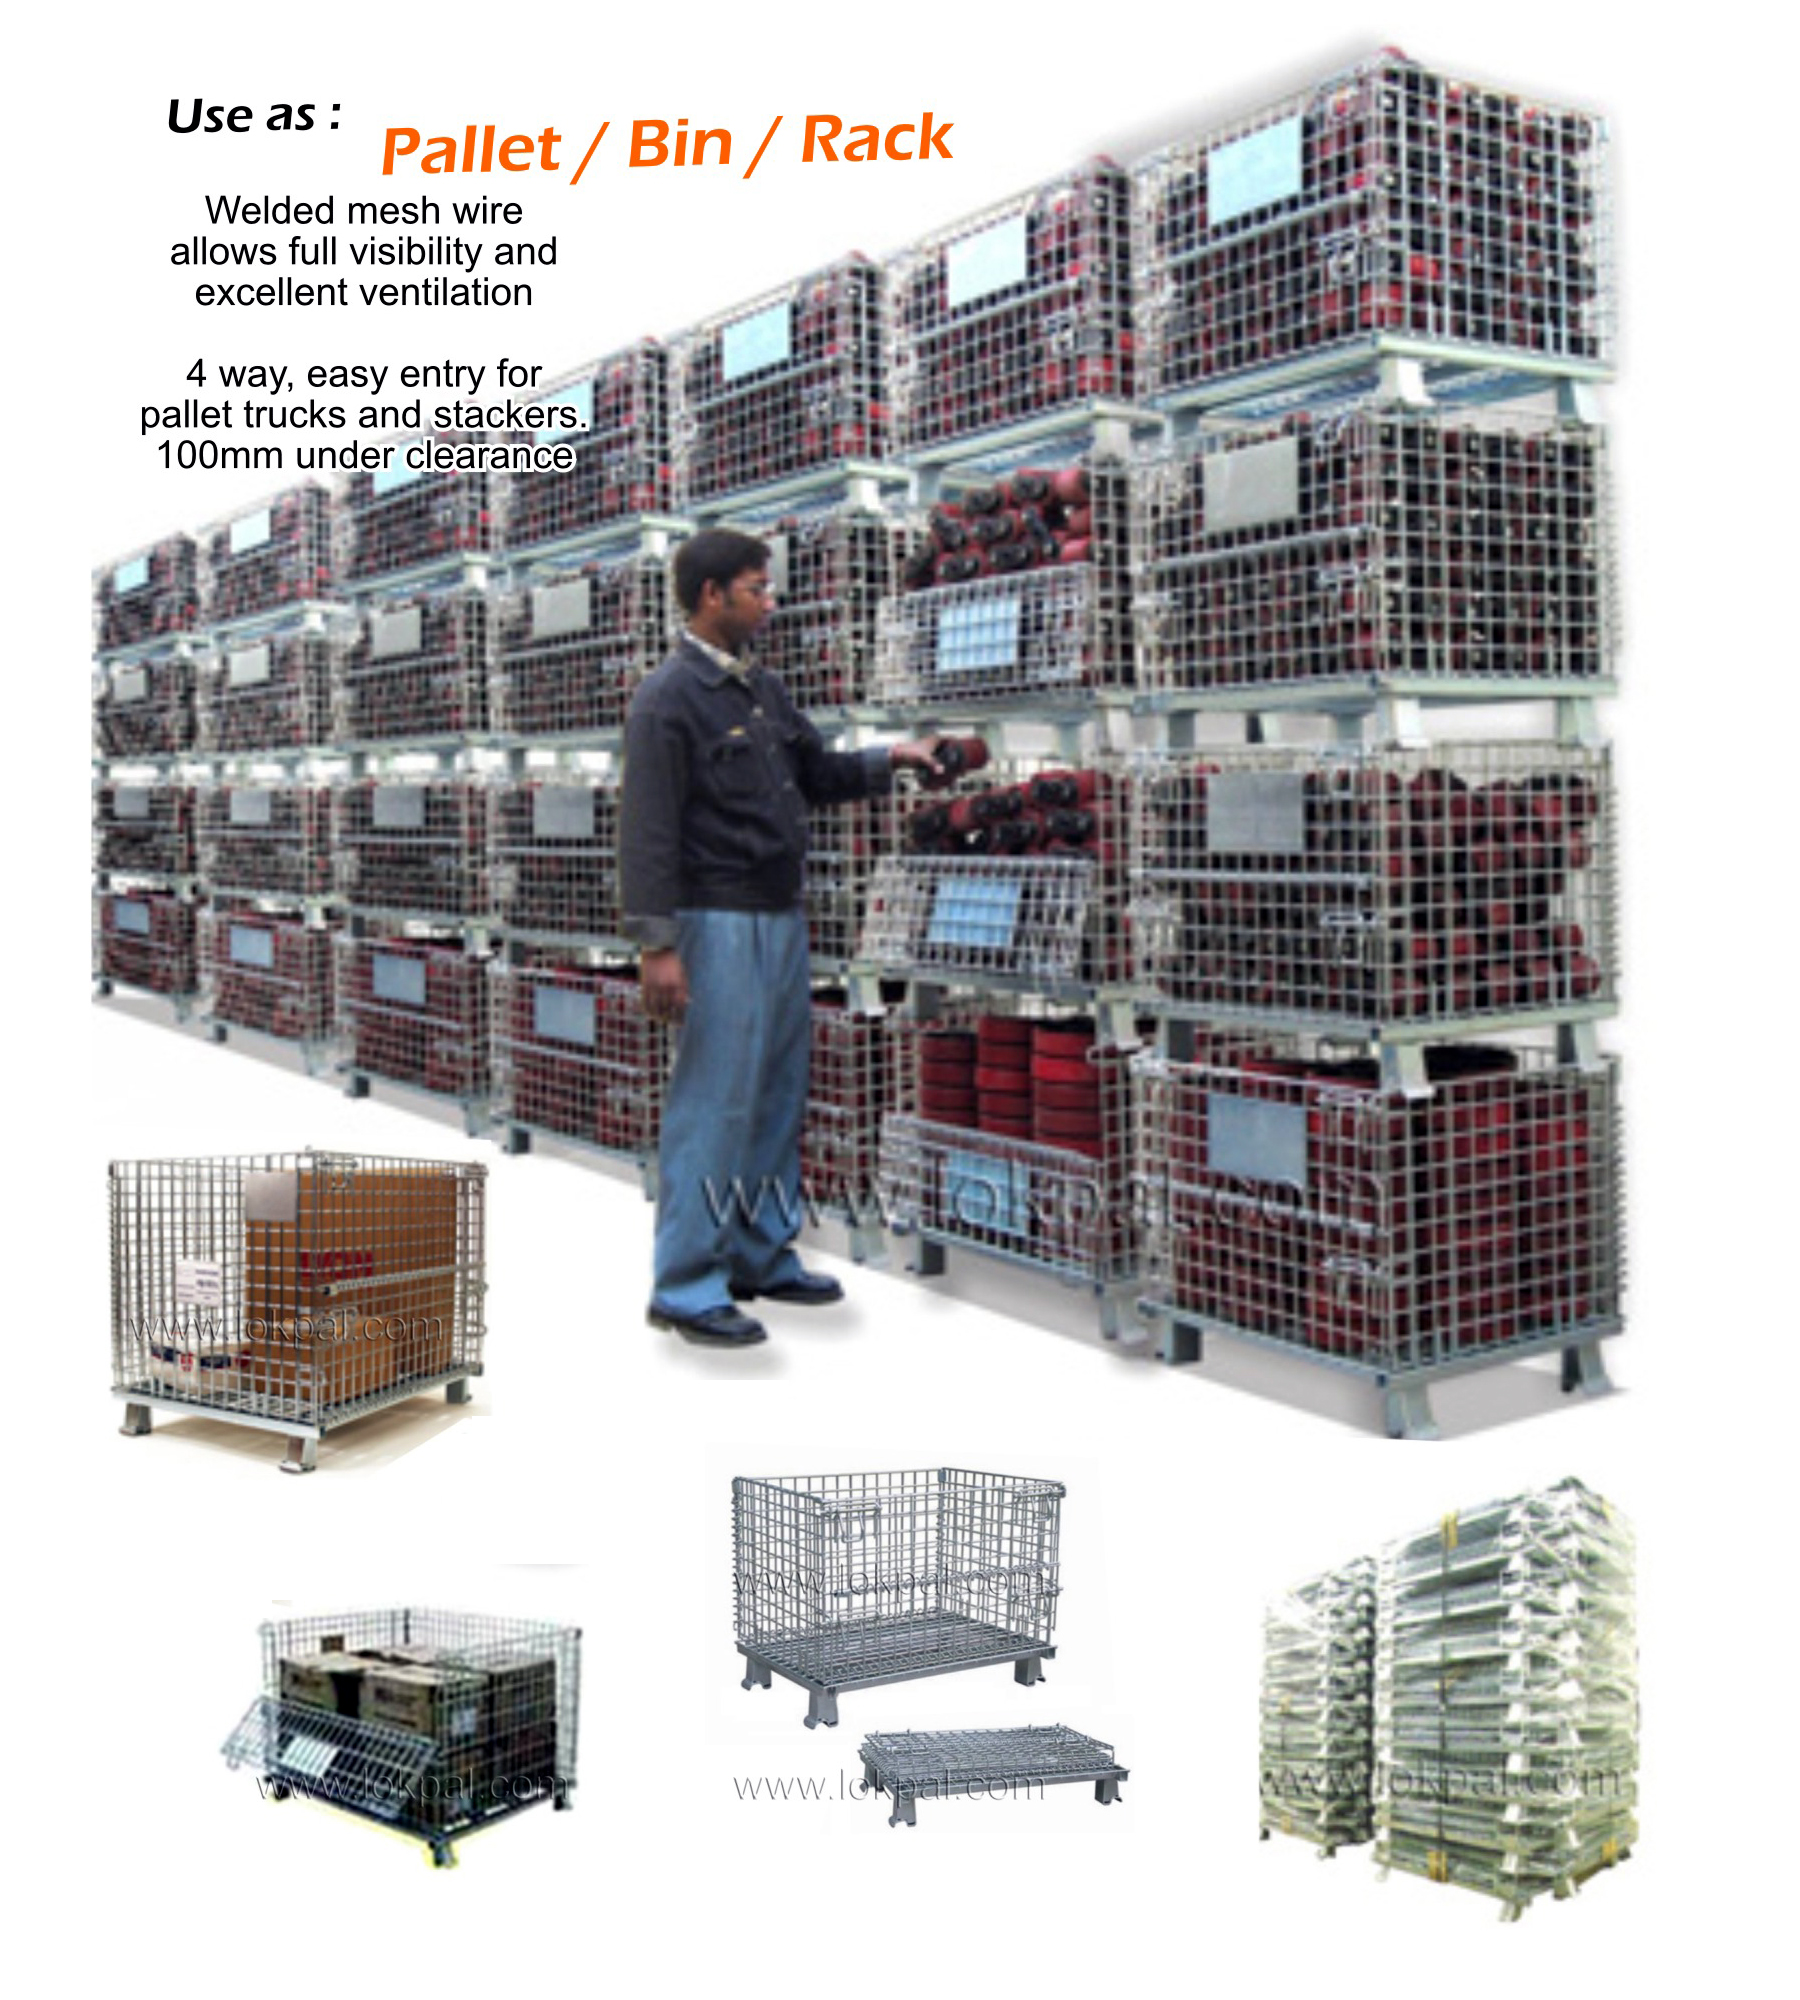 Foldable Wire Containers, Foldable Wire Container Manufacturer, Foldable Wire Container Supplier, Delhi NCR, Noida, India